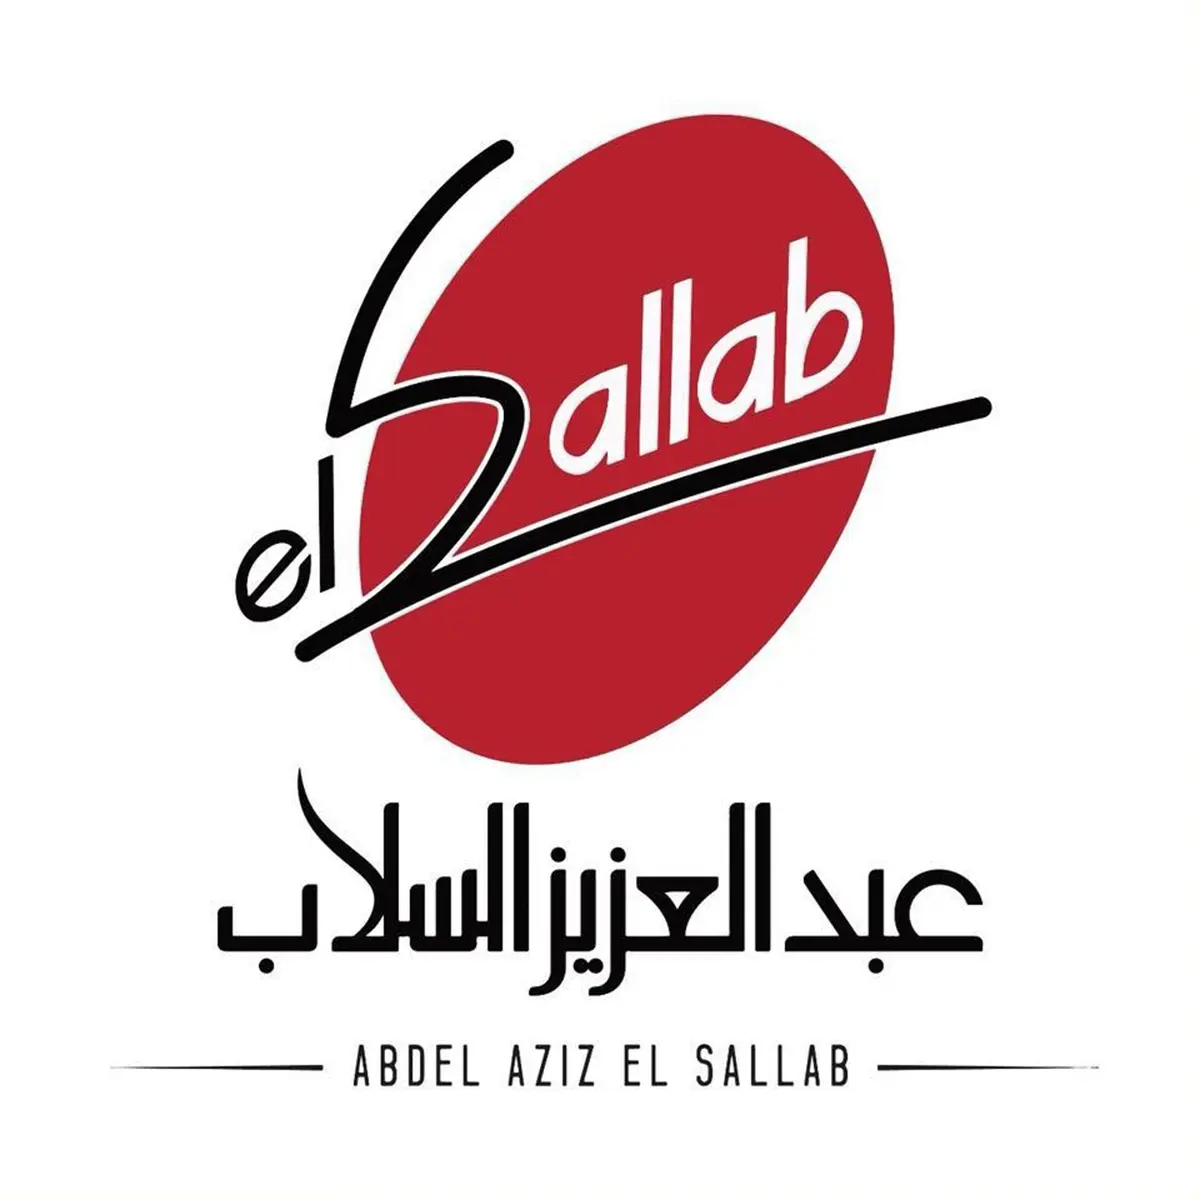 Elsallab logo